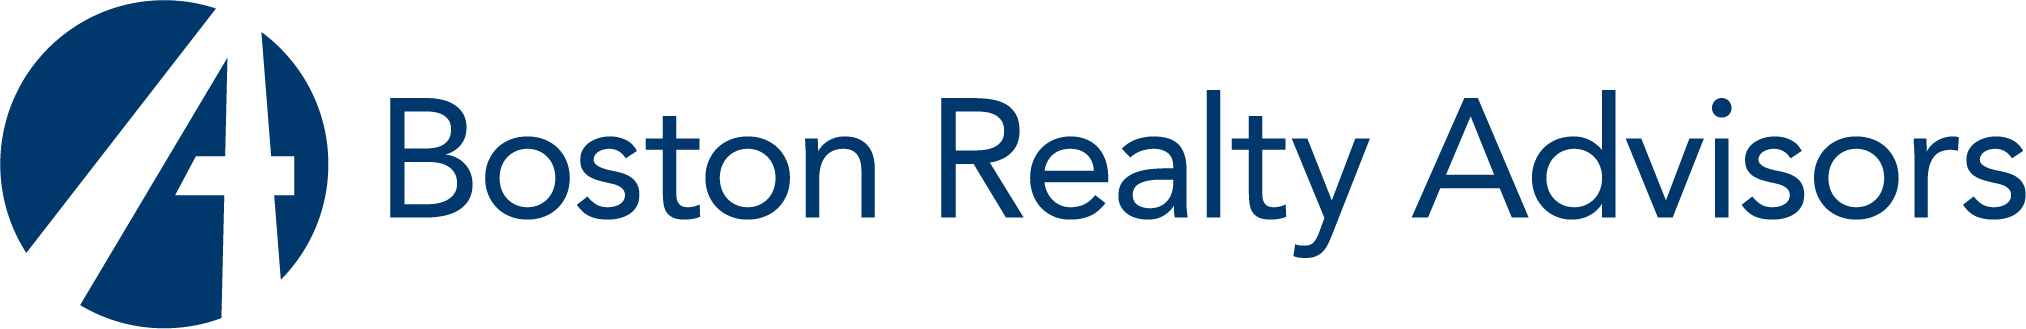 Boston Realty Advisors (BRA) Logo